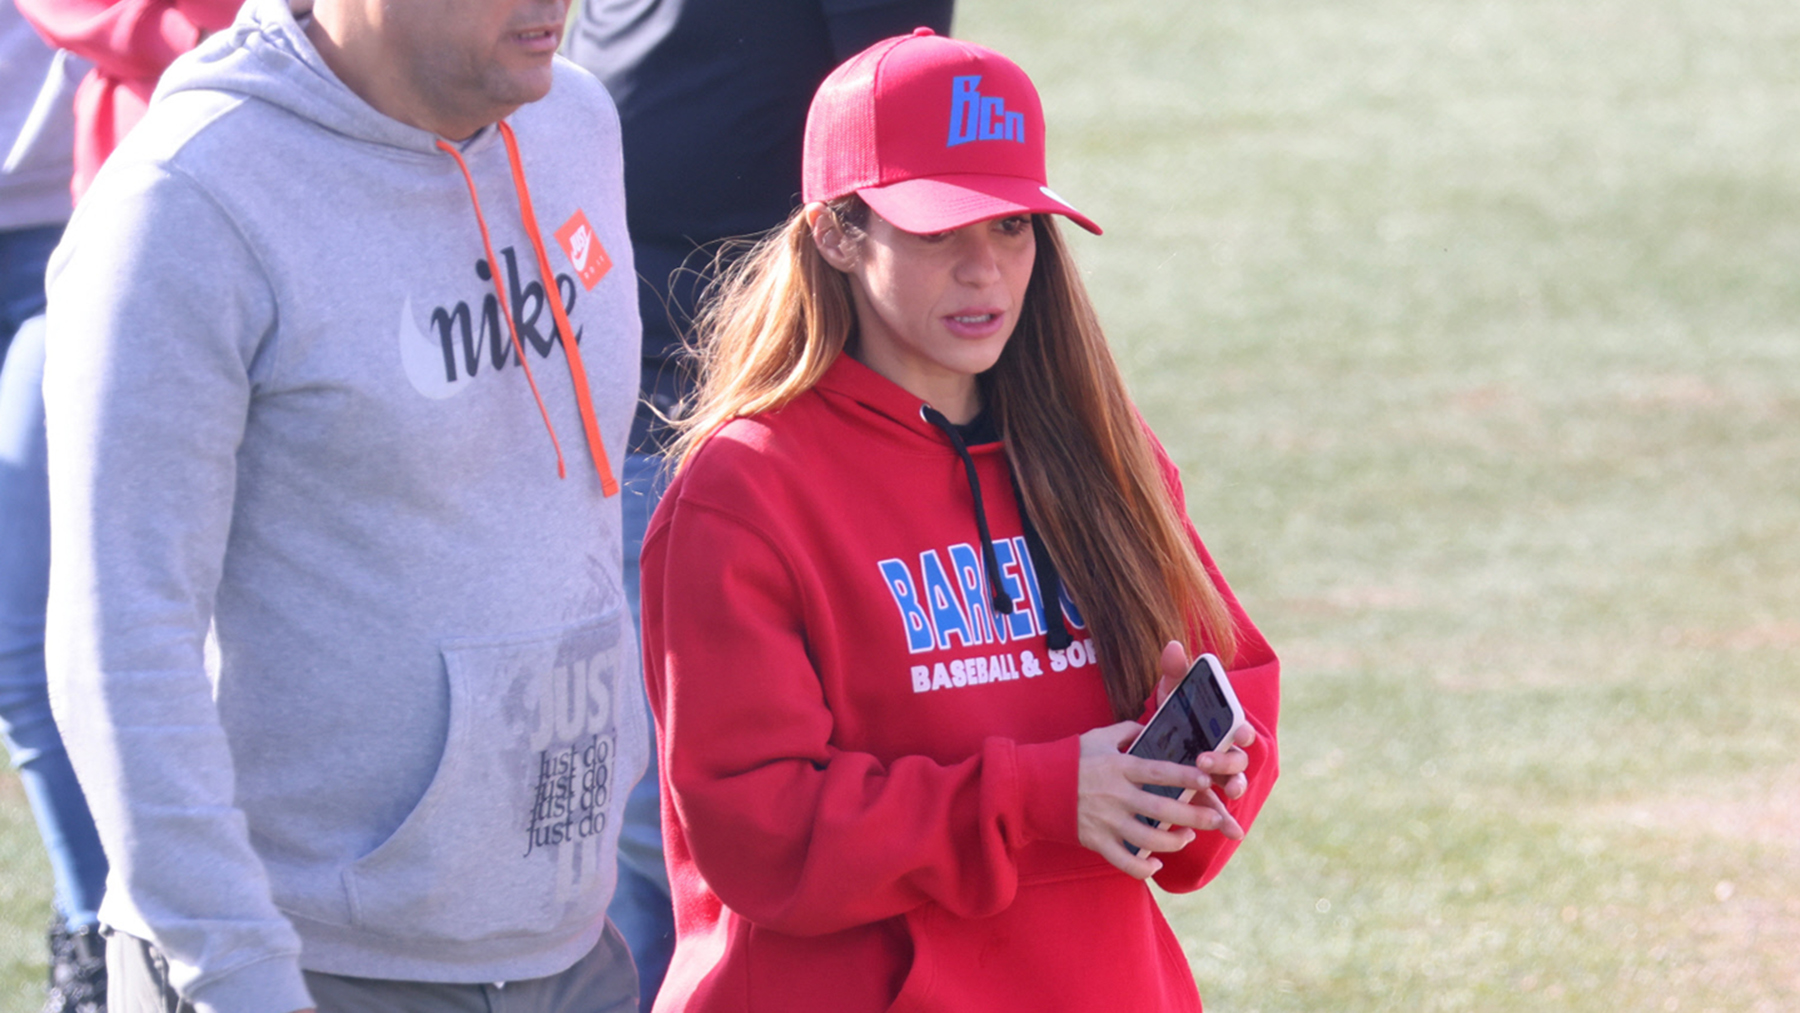 Shakira asiste a un partido de béisbol de su hijo / Gtres